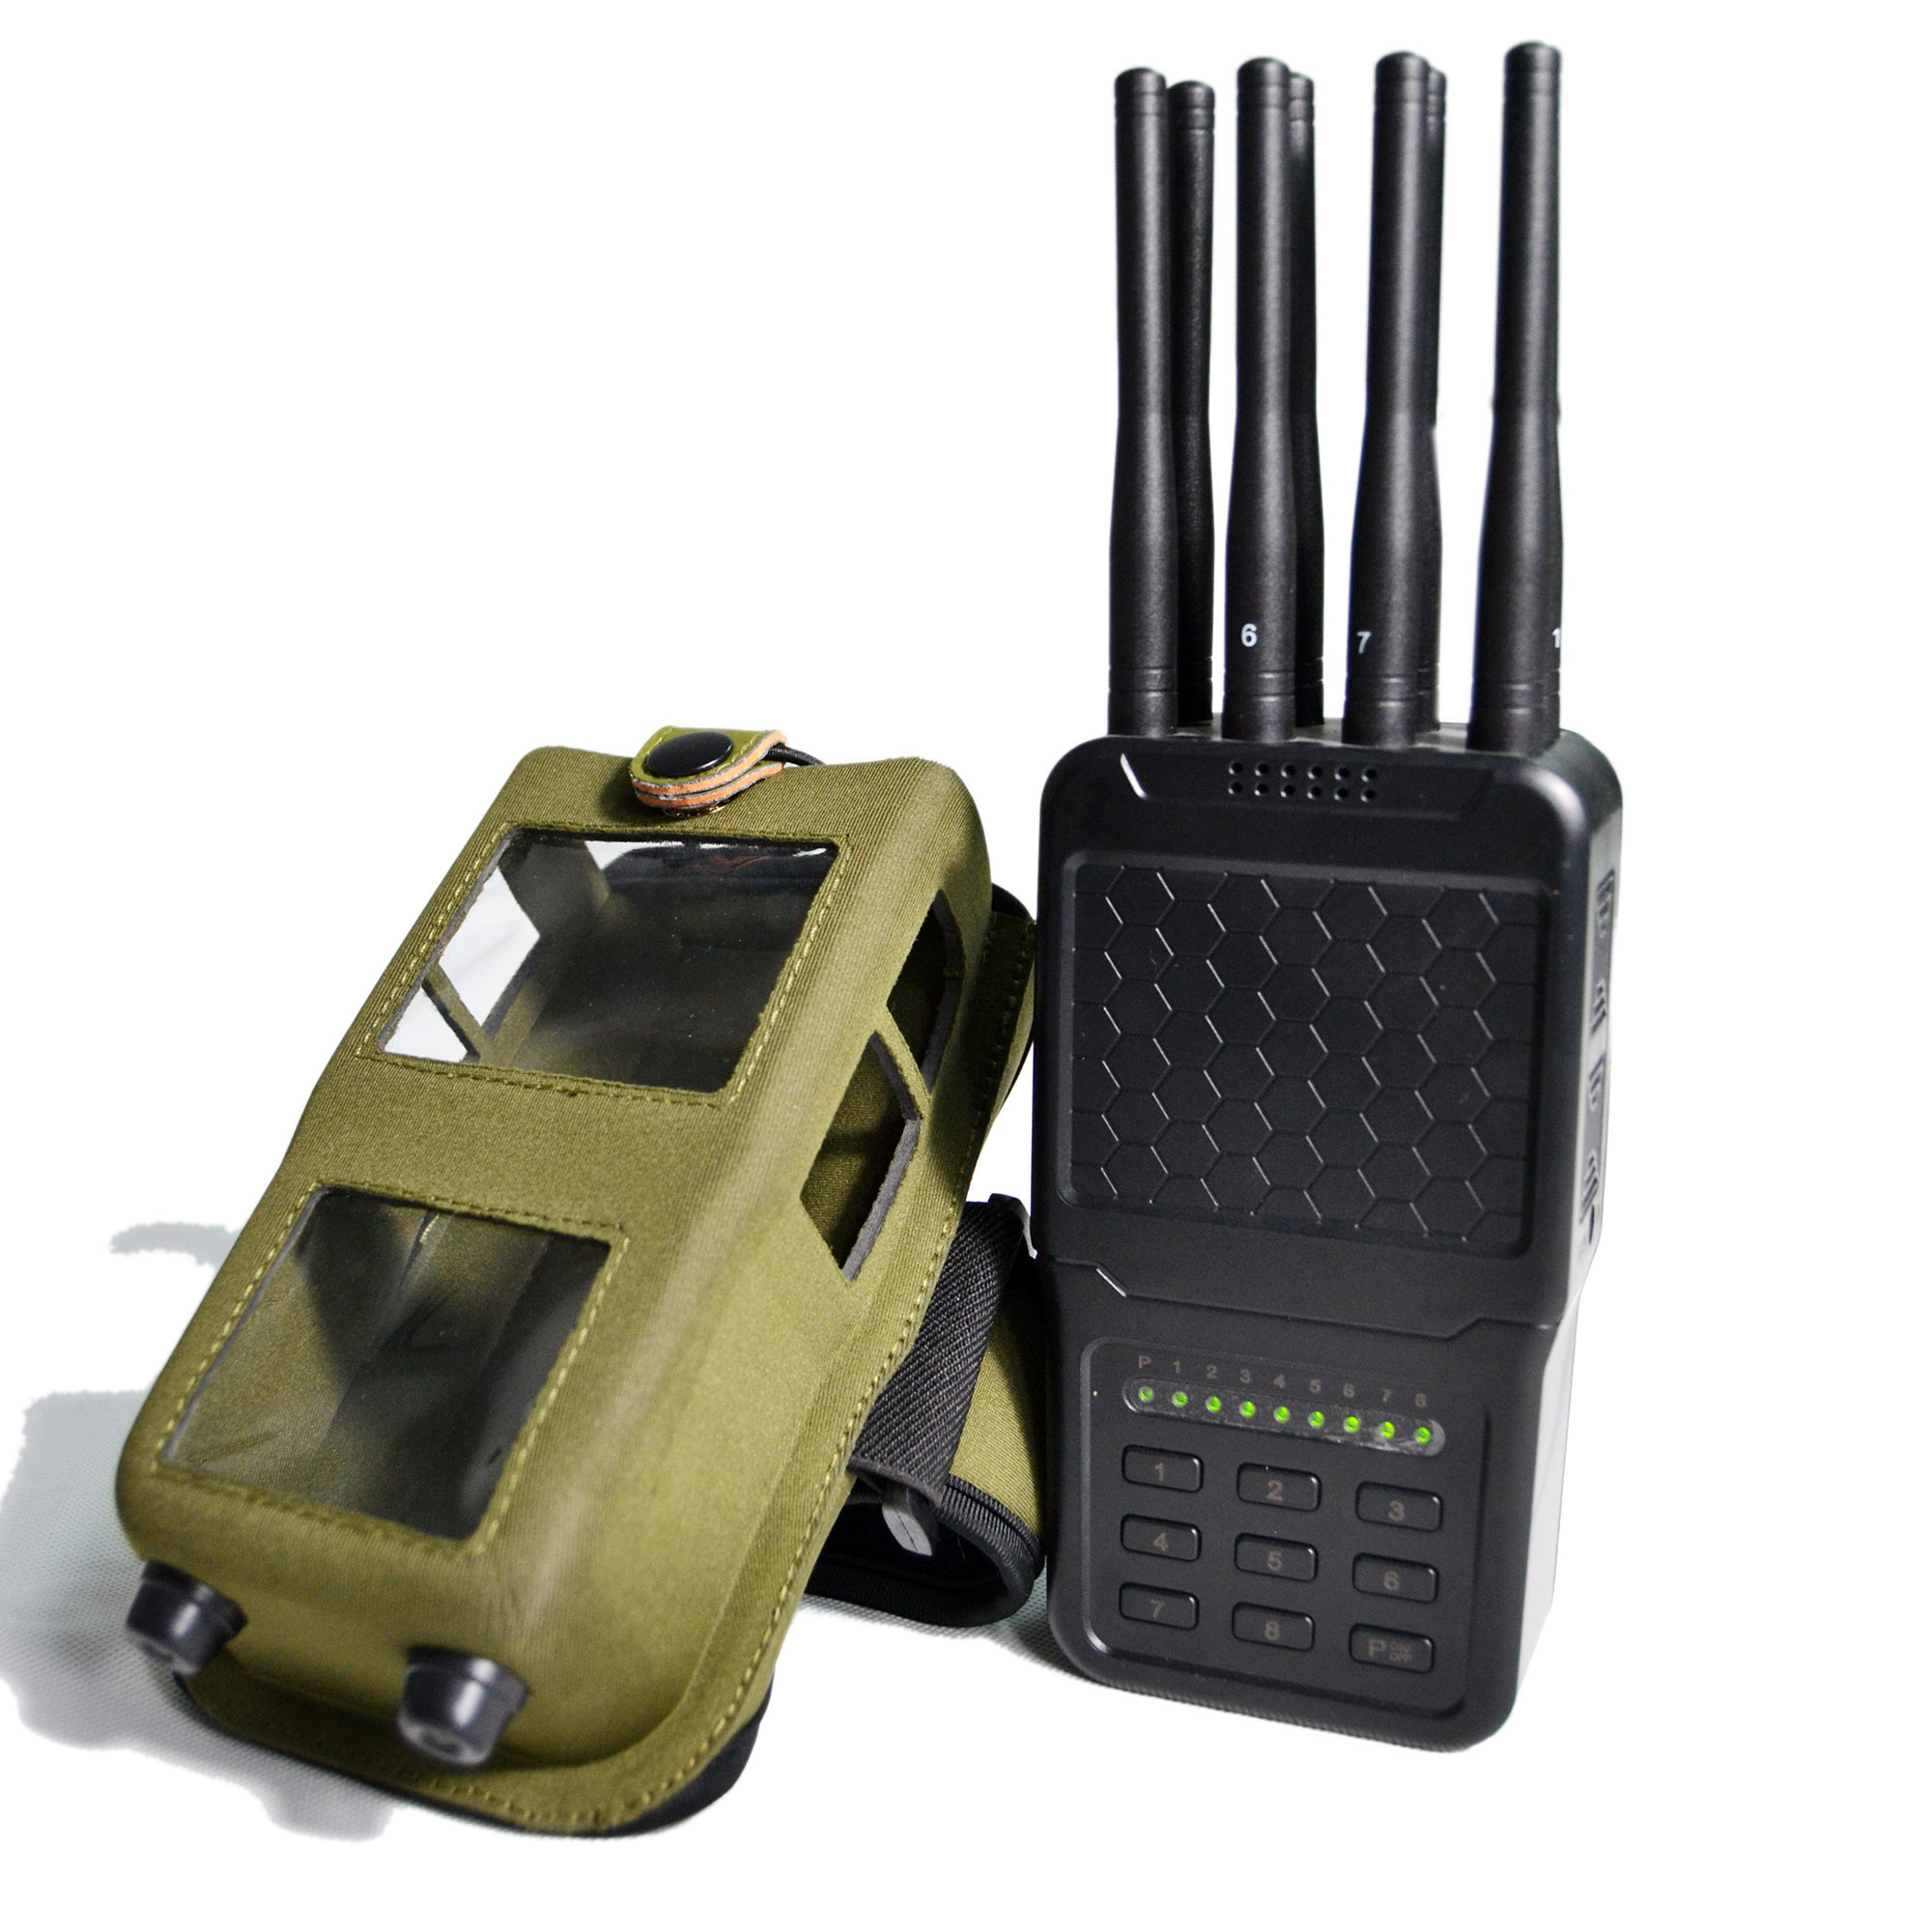 frequency jammer blocker - 8 Antenna Handheld Cell Phone Signal Jammer WIFI GPG LOJACK Blockers